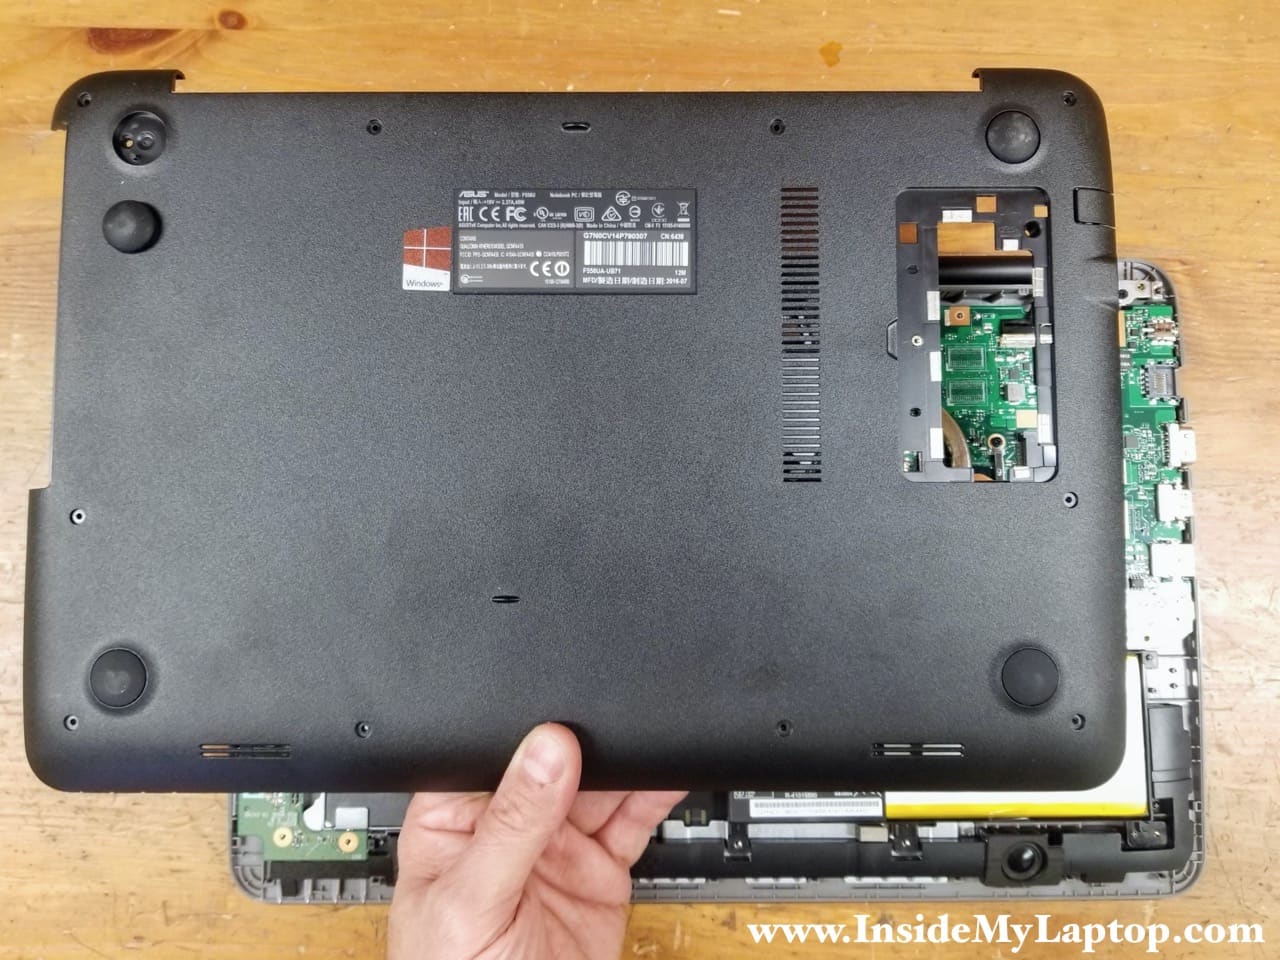 Full of F556U series – Inside my laptop